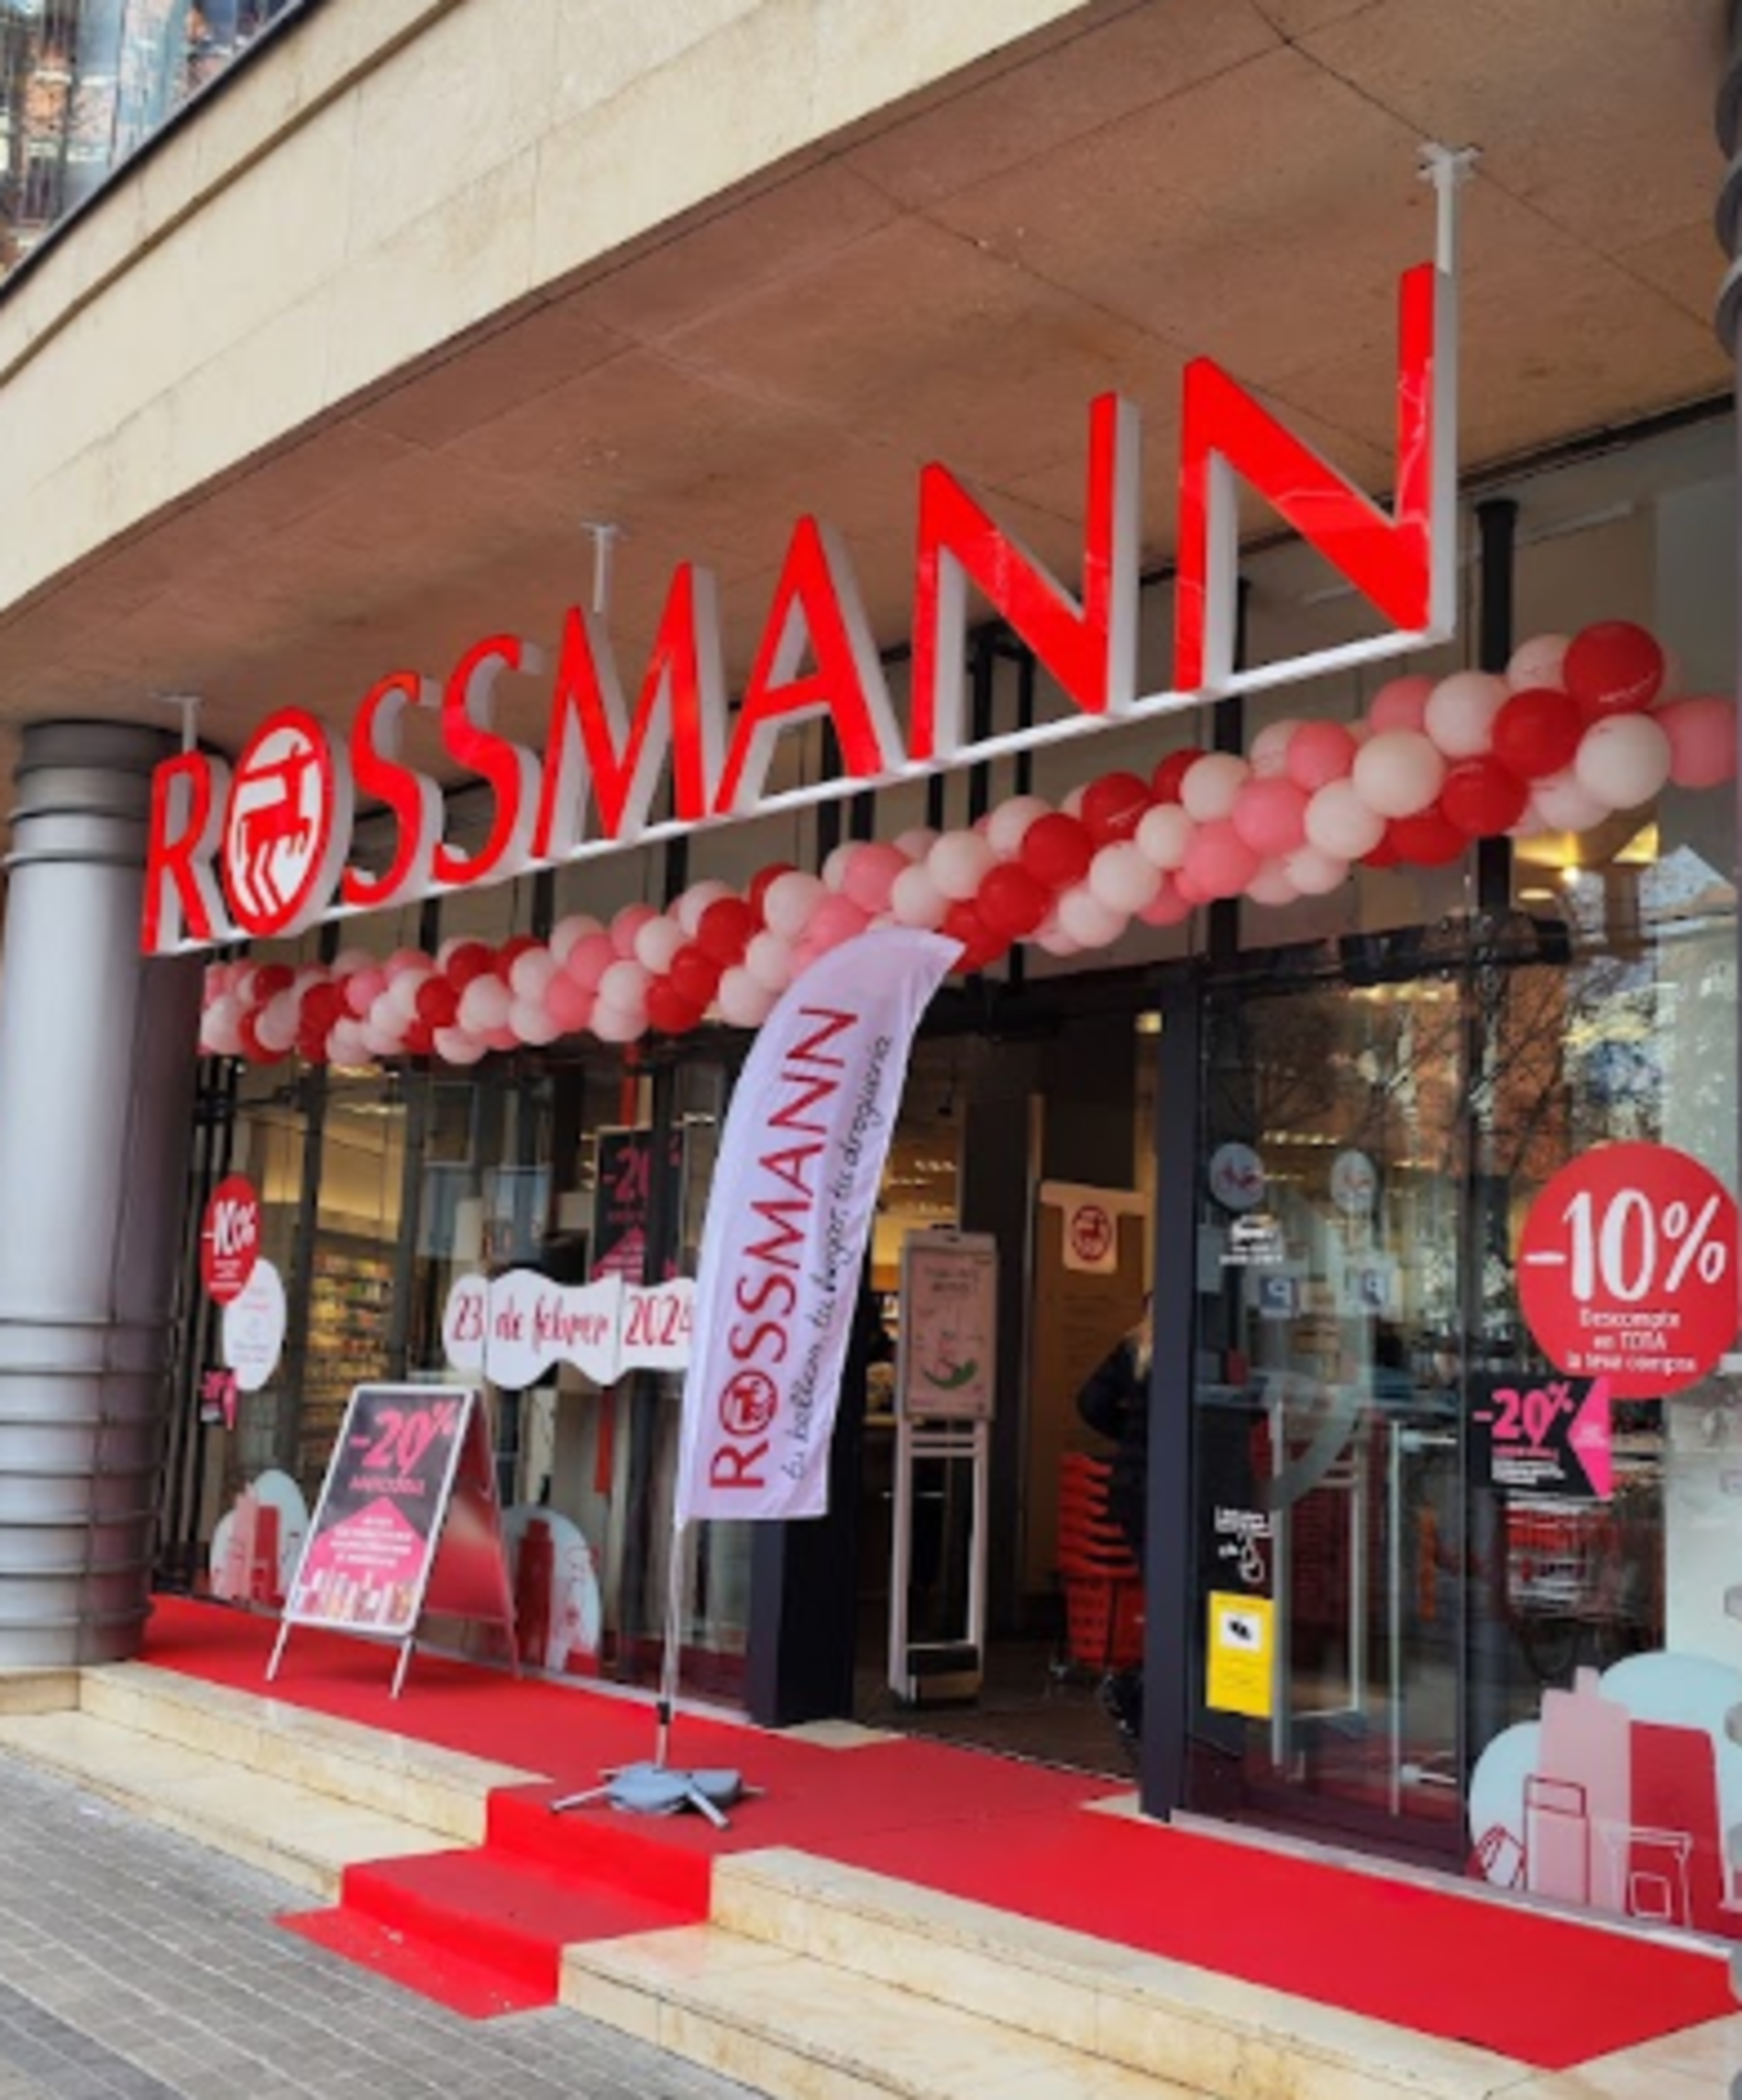 Rossmann arrasa en la seva aclamada estrena a Barcelona